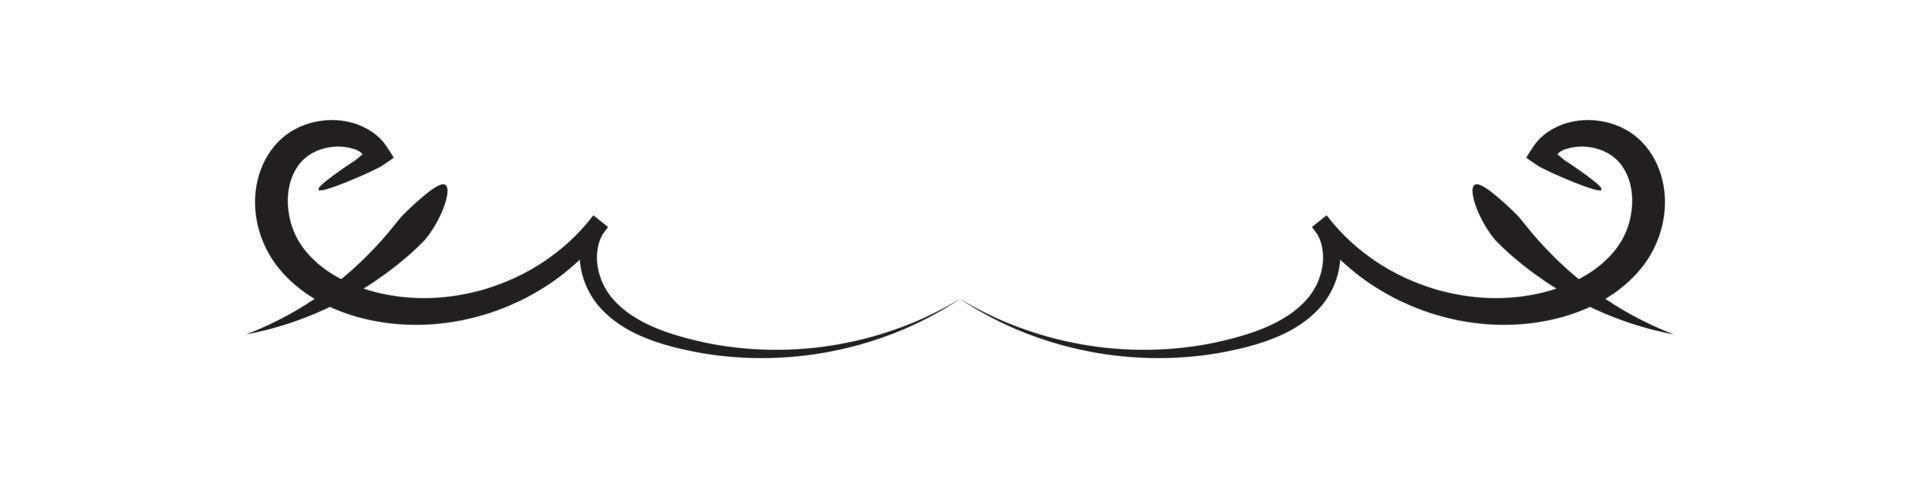 Divider isolated on white background. minimalist divider. Vector illustration